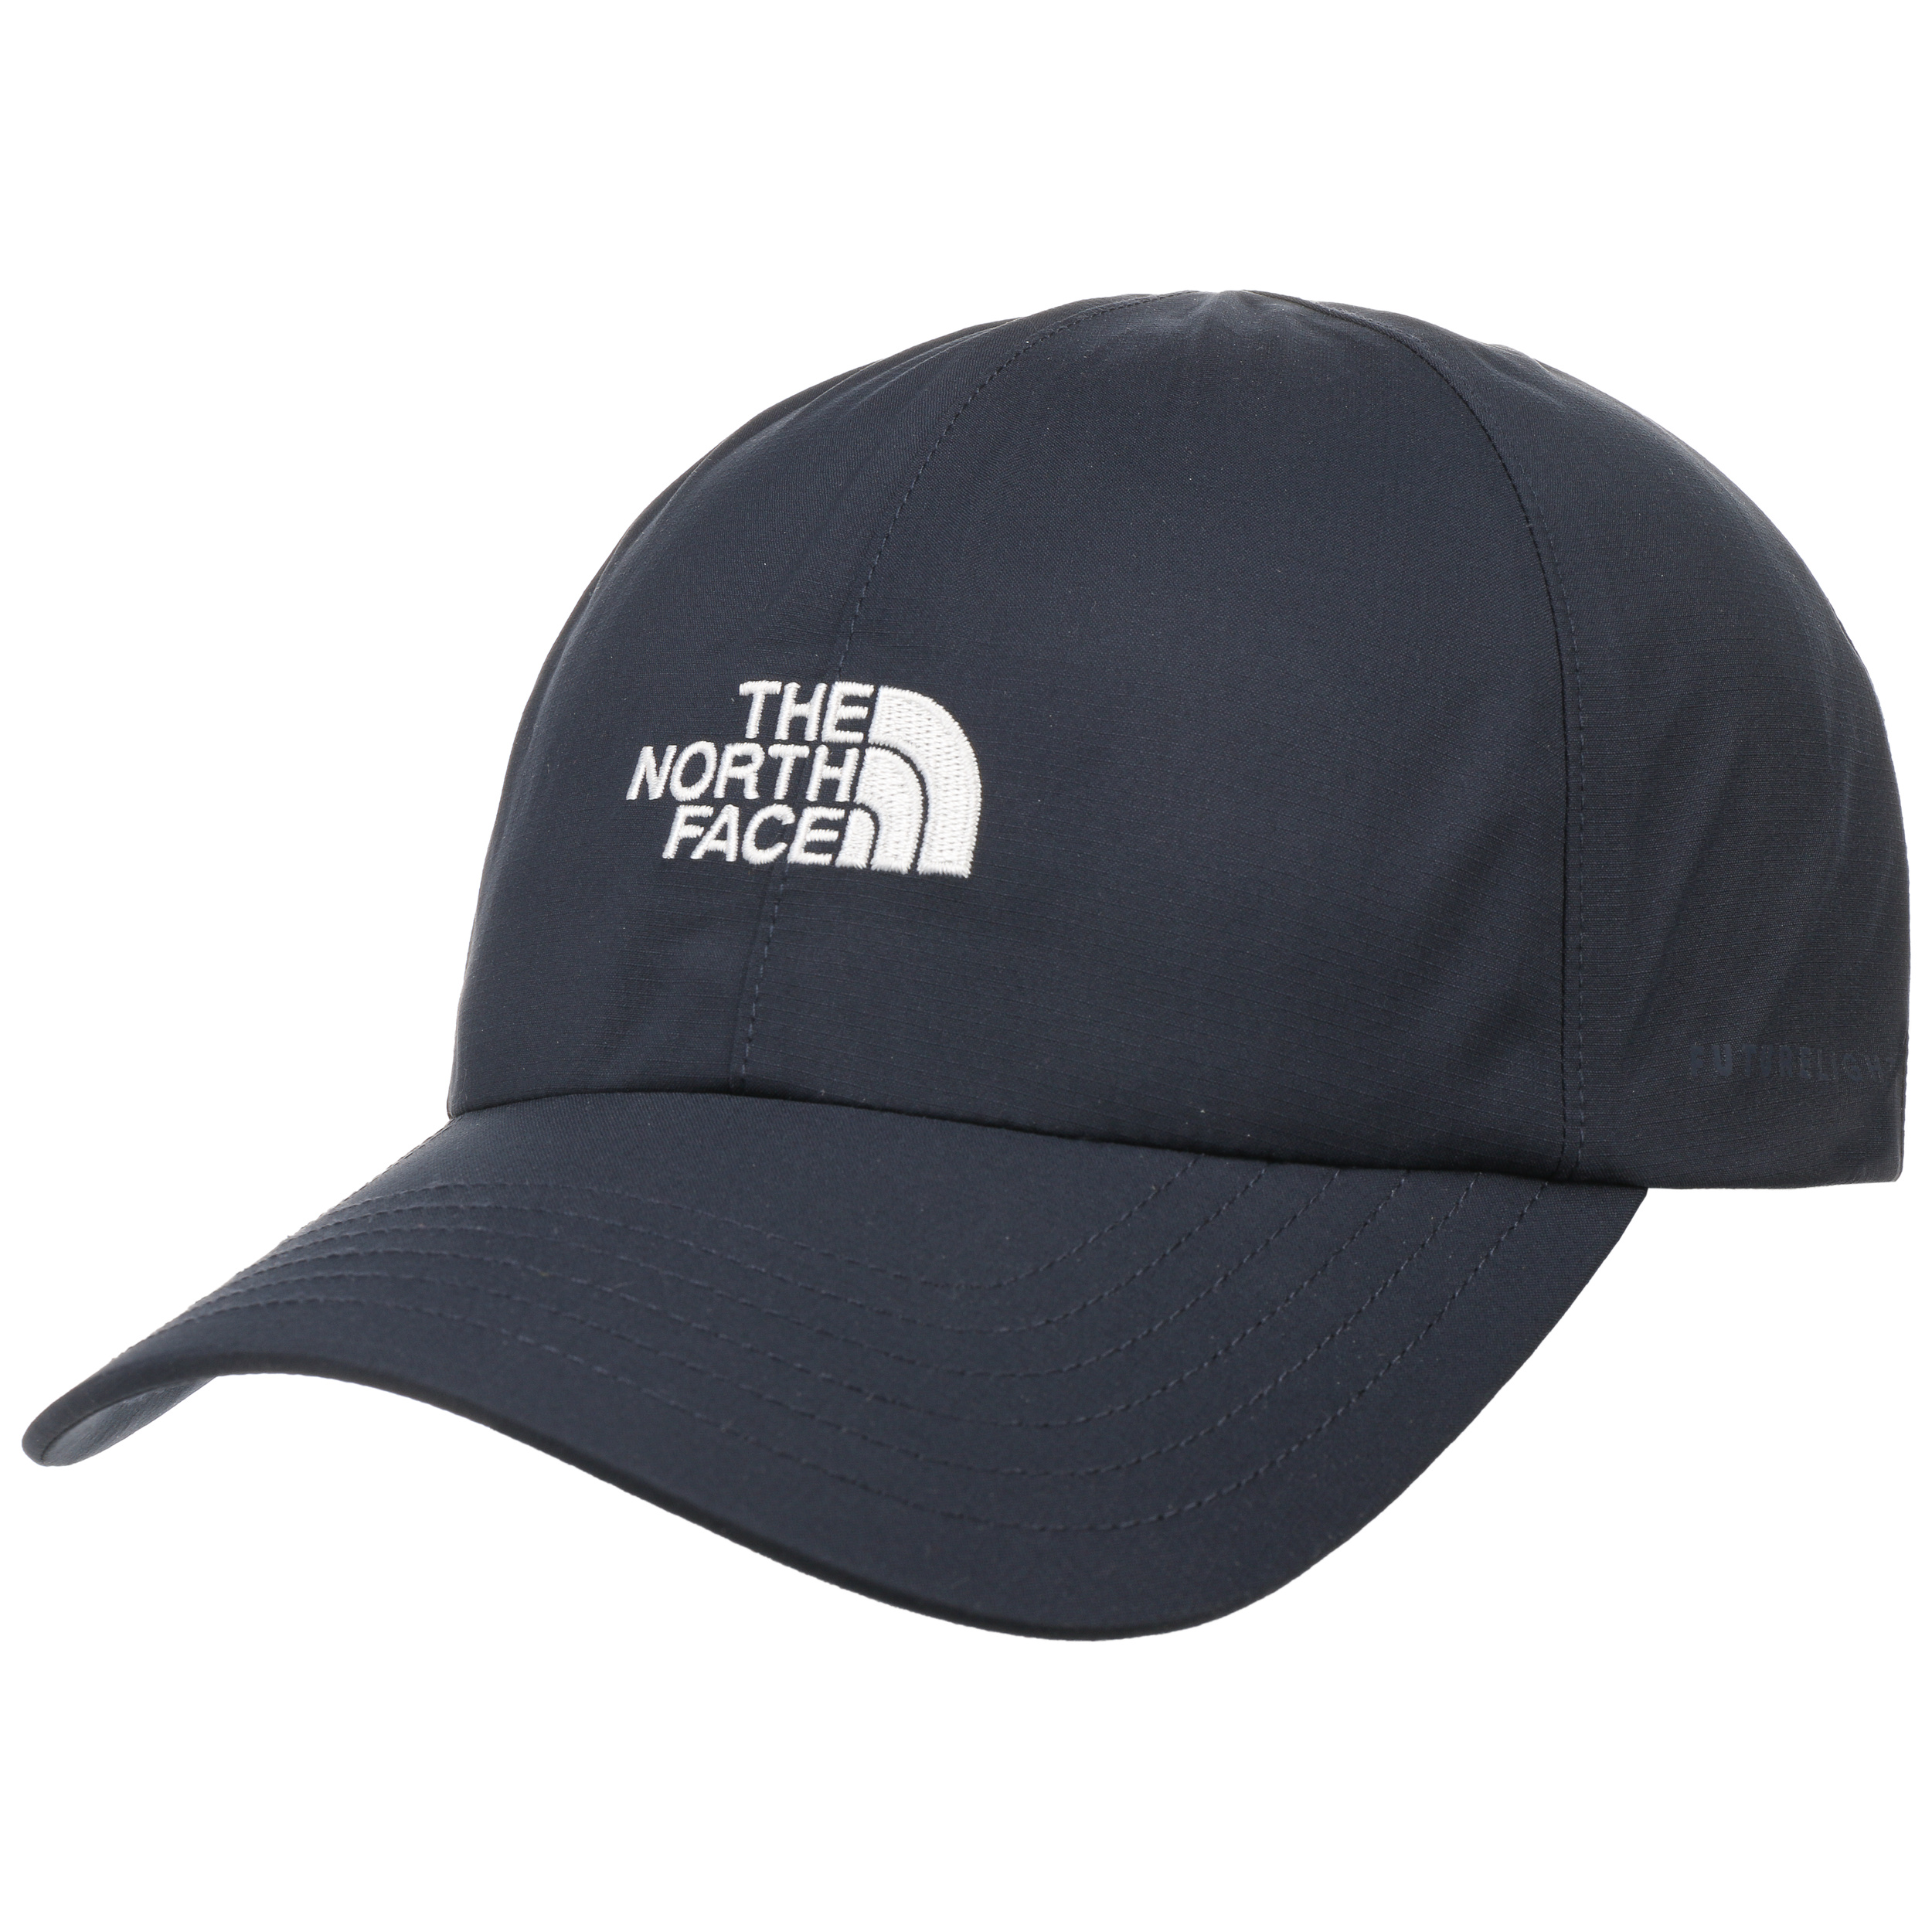 north face logo hat